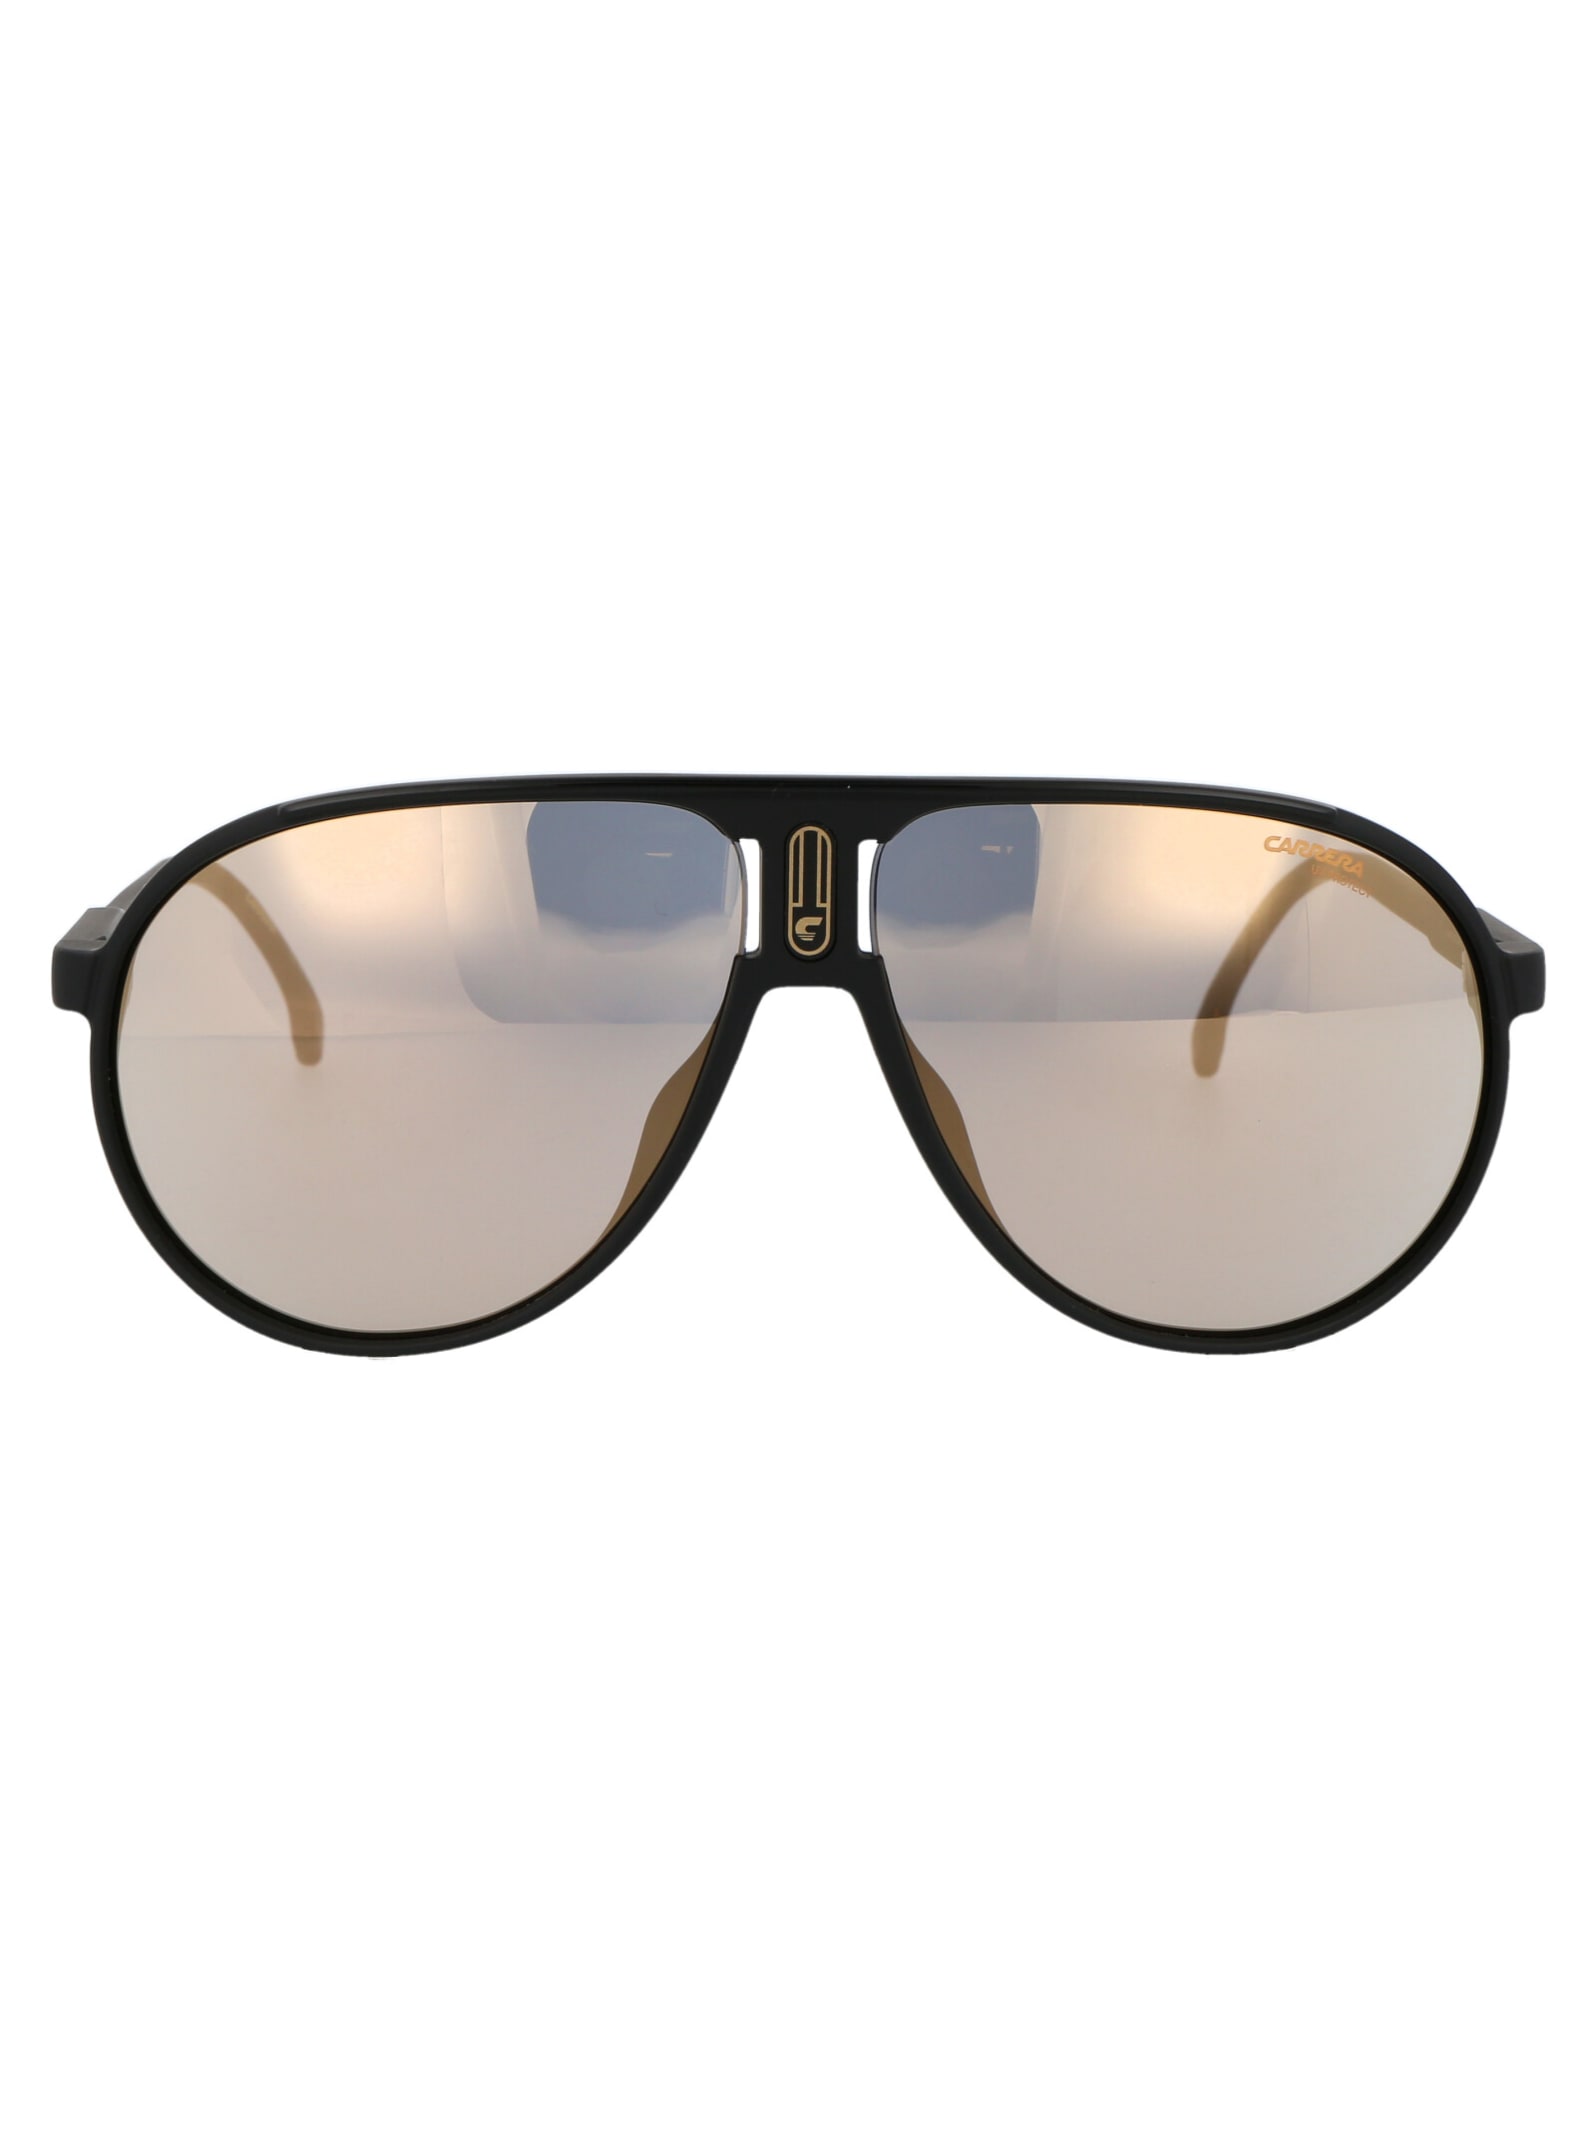 Carrera Champion65/n Sunglasses